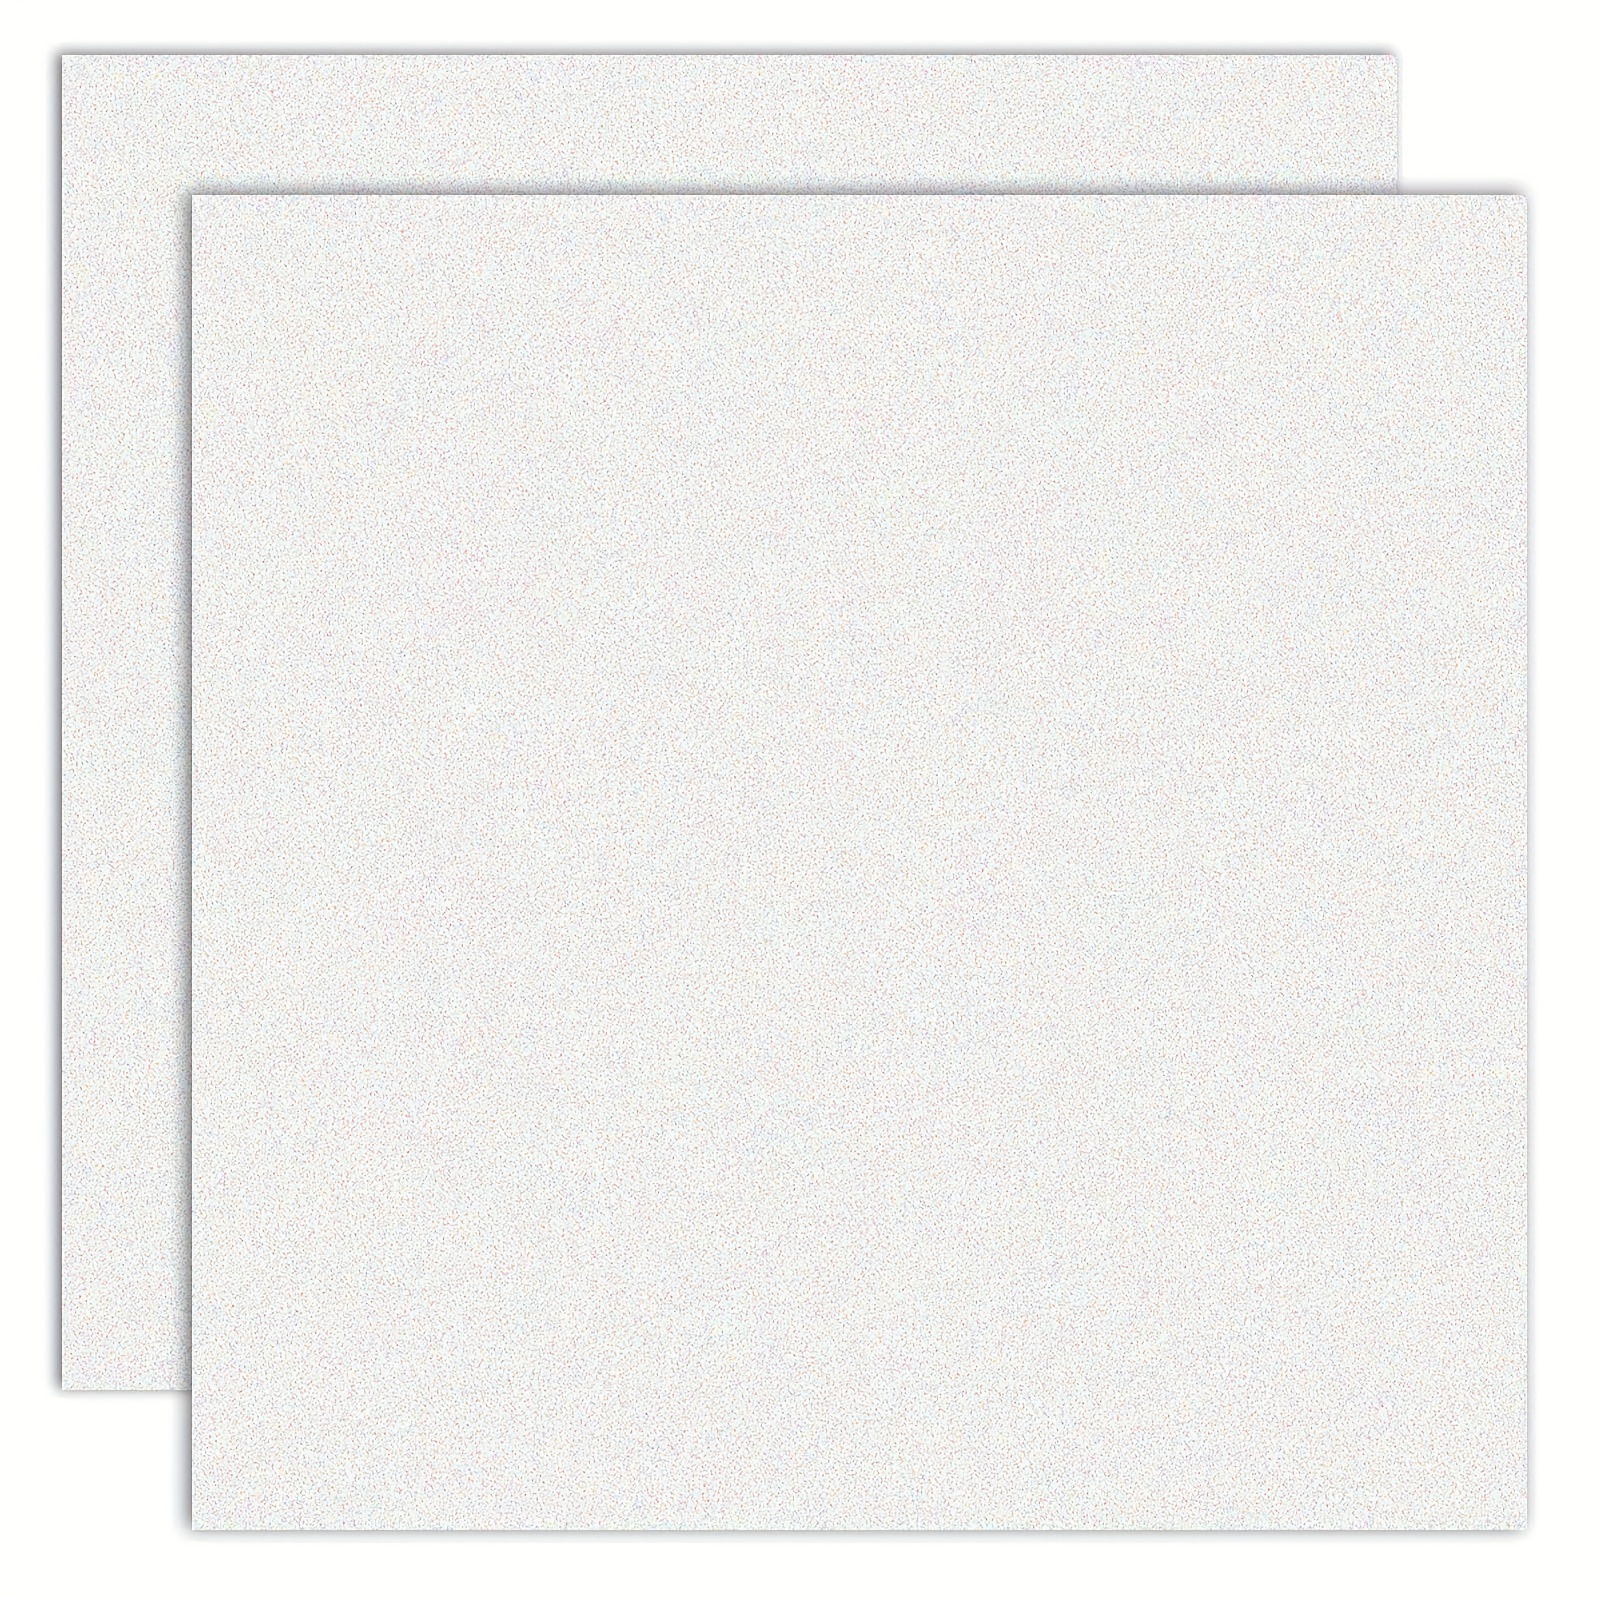 12x12 Blue Glitter Cardstock, 300gsm Cardstock, Premium Glitter Cardstock,  Paper for Crafts 